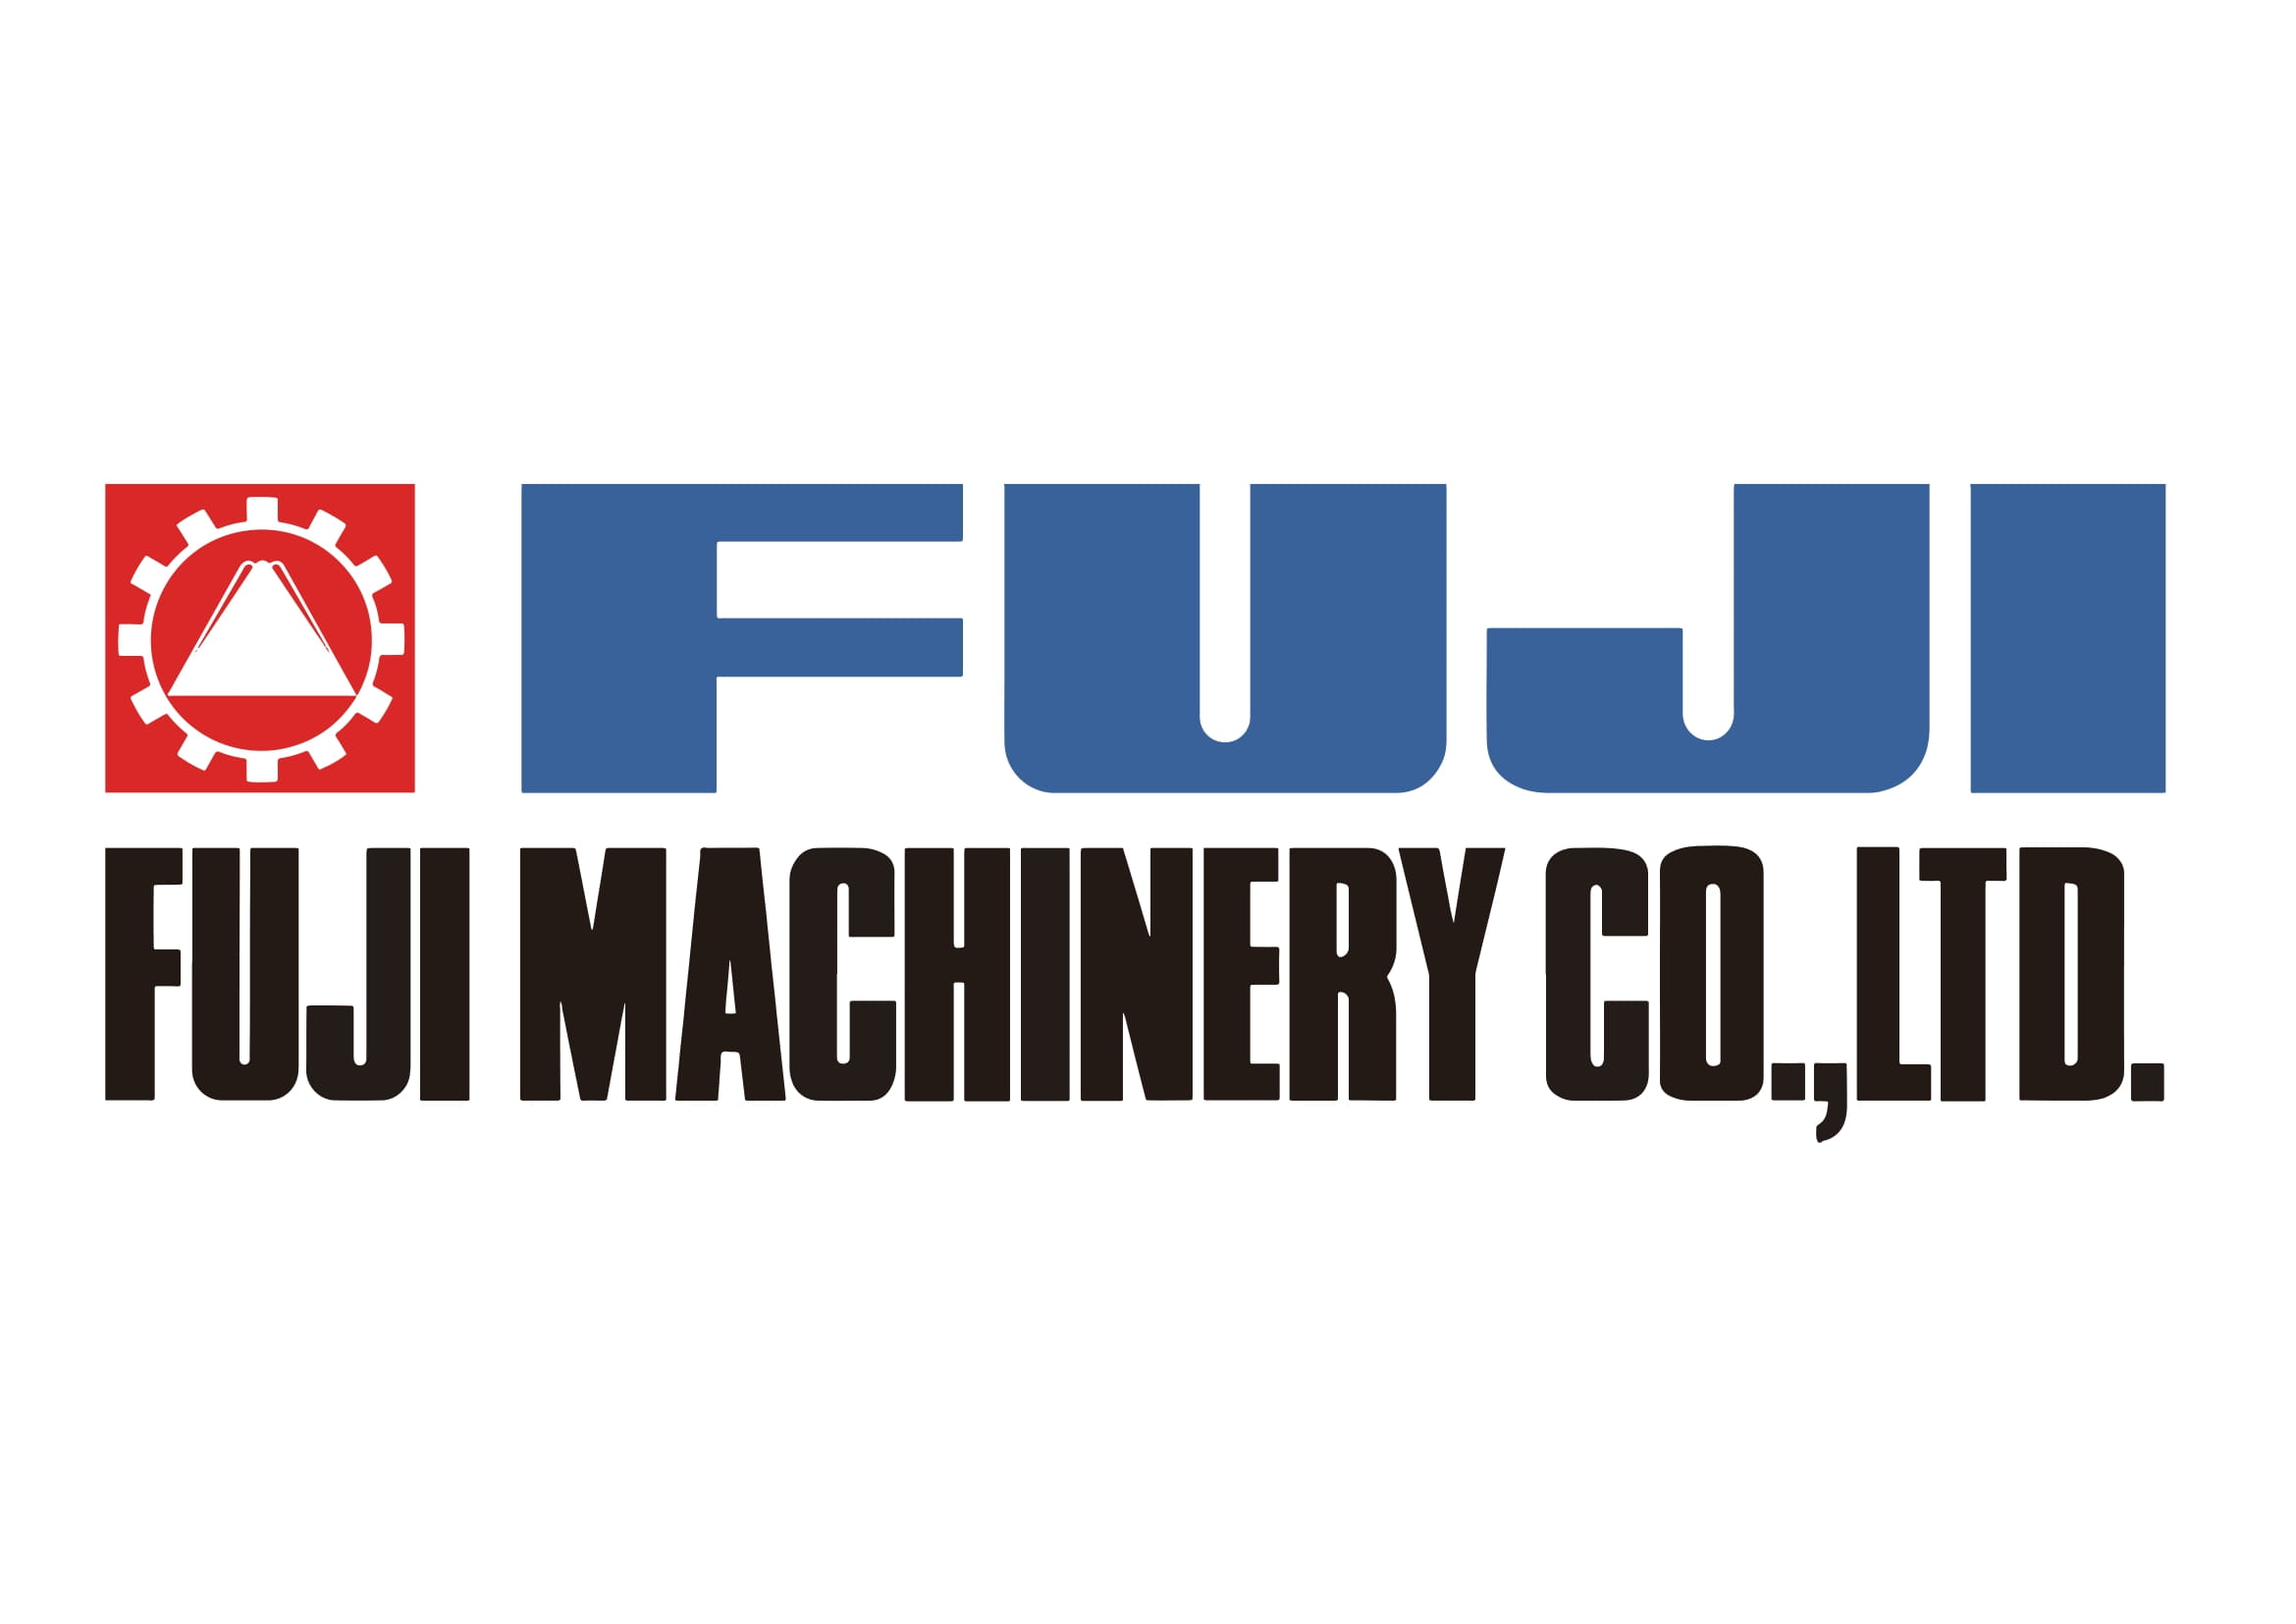 FUJI MACHINERY CO., LTD.